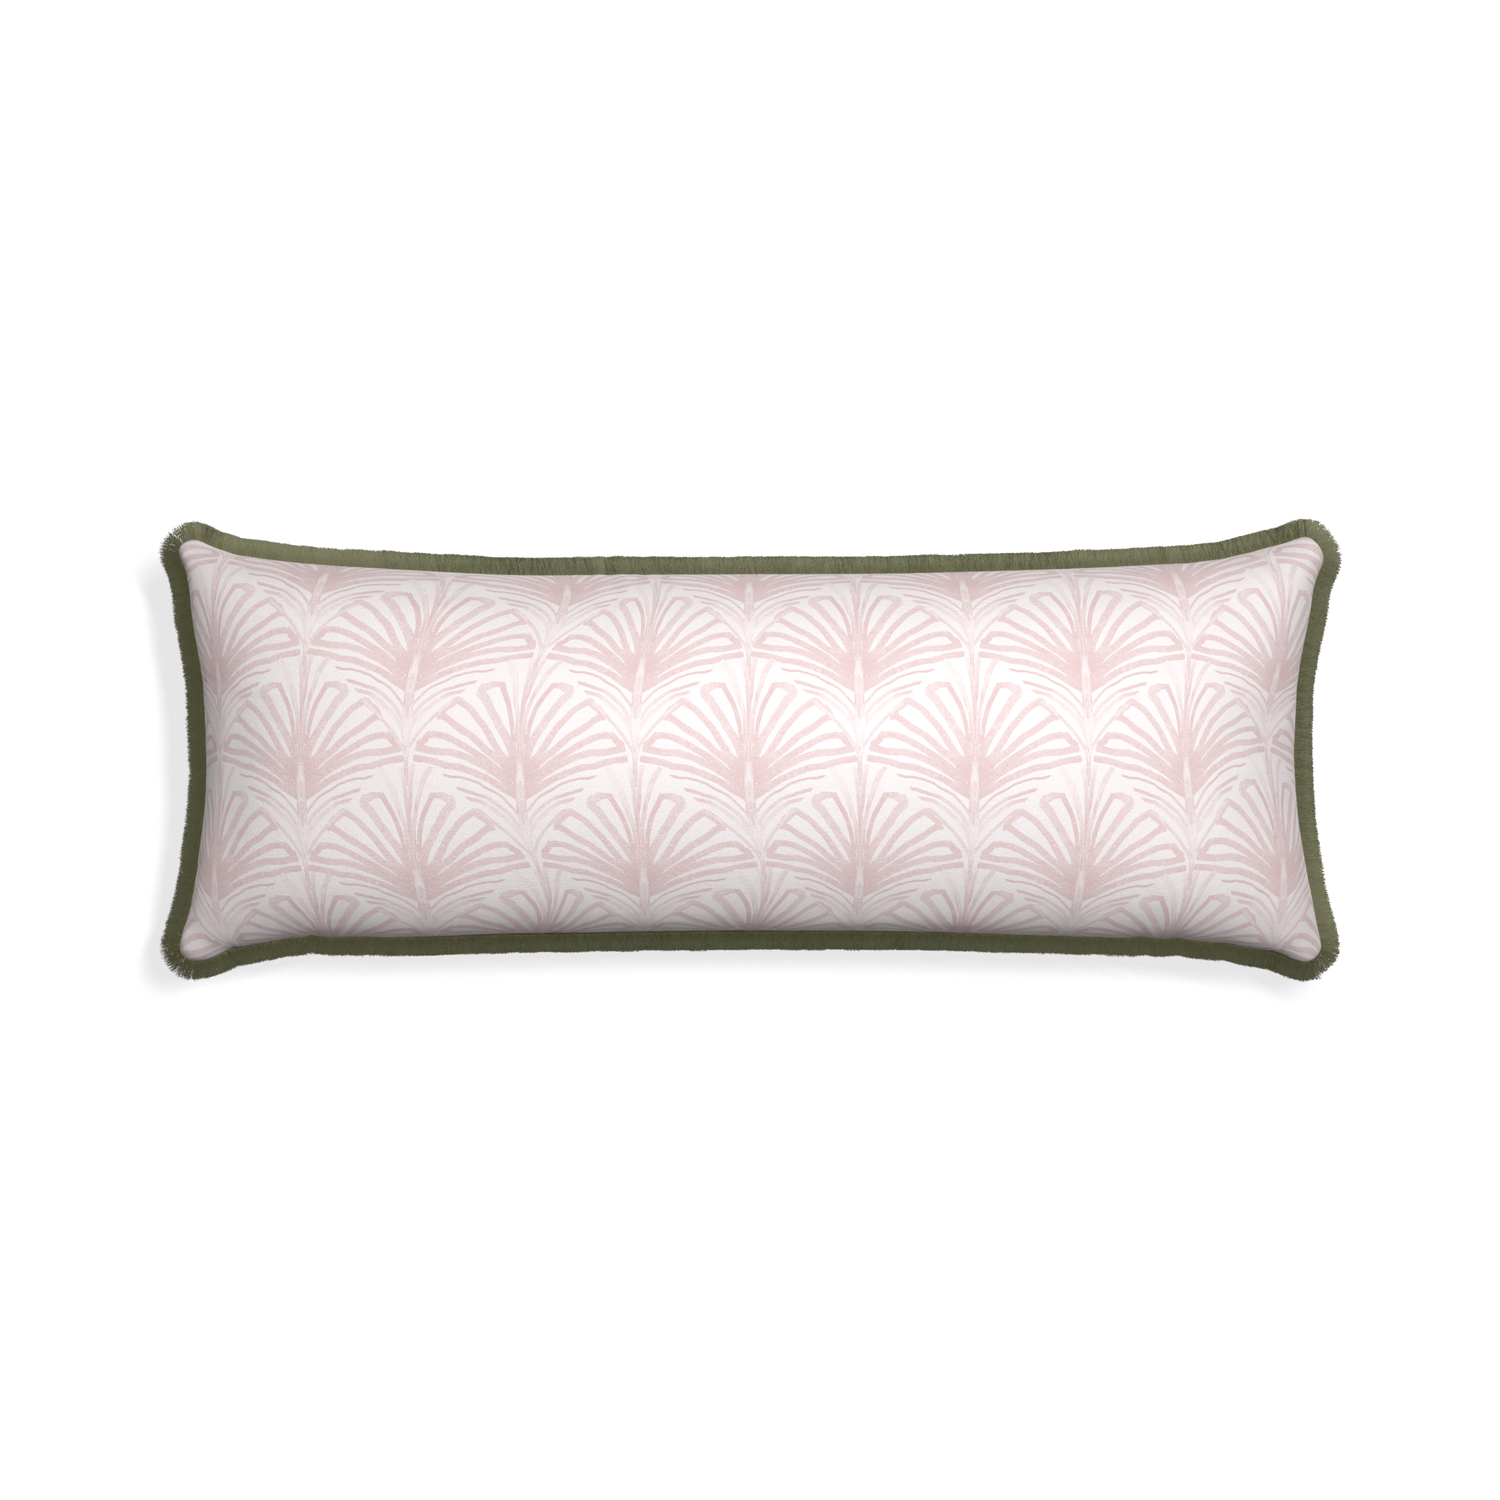 Xl-lumbar suzy rose custom pillow with sage fringe on white background